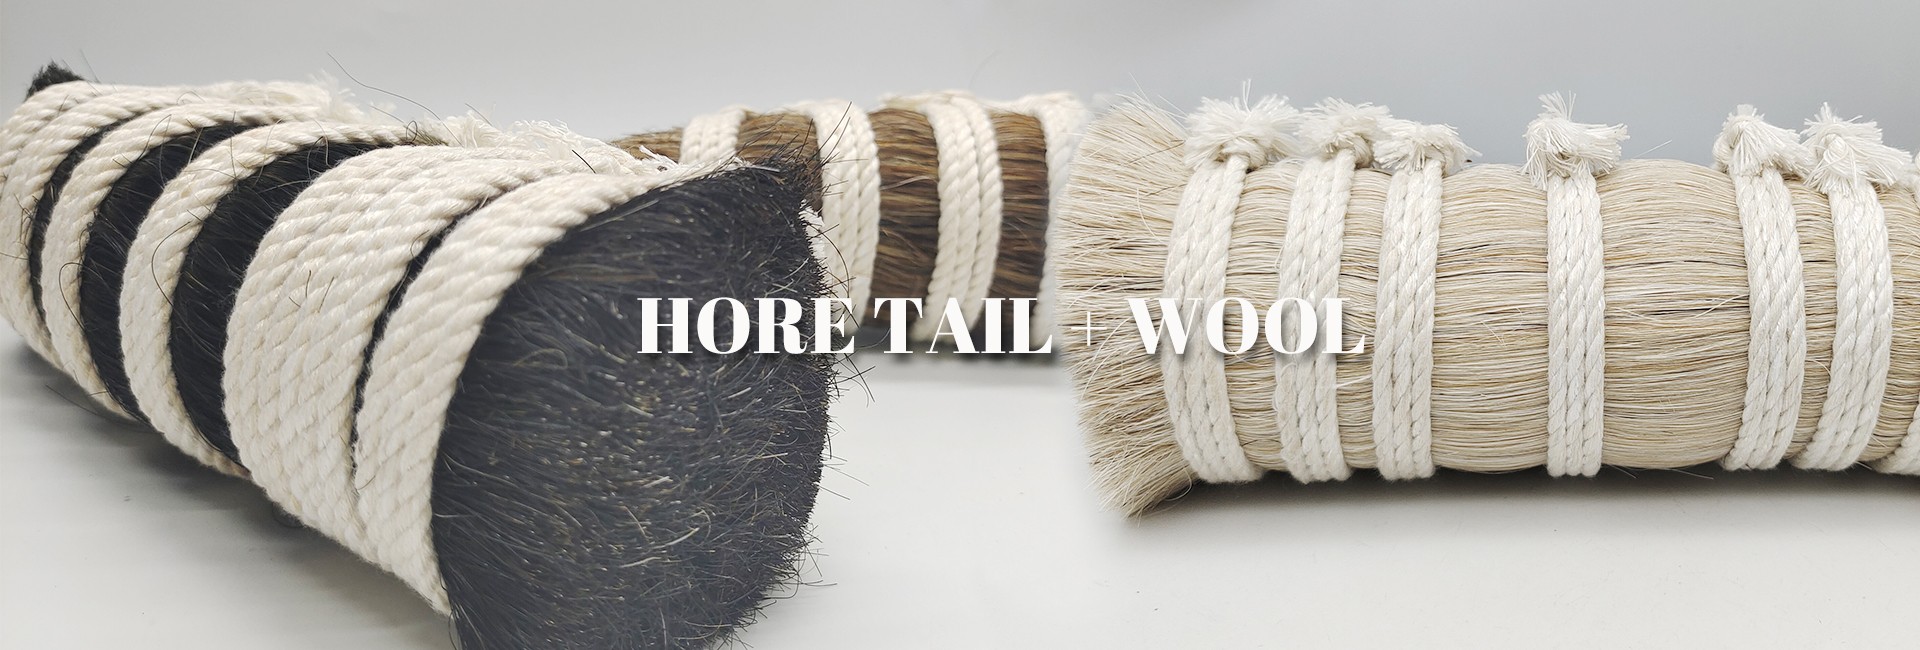 wool,horsetail,natural bristle